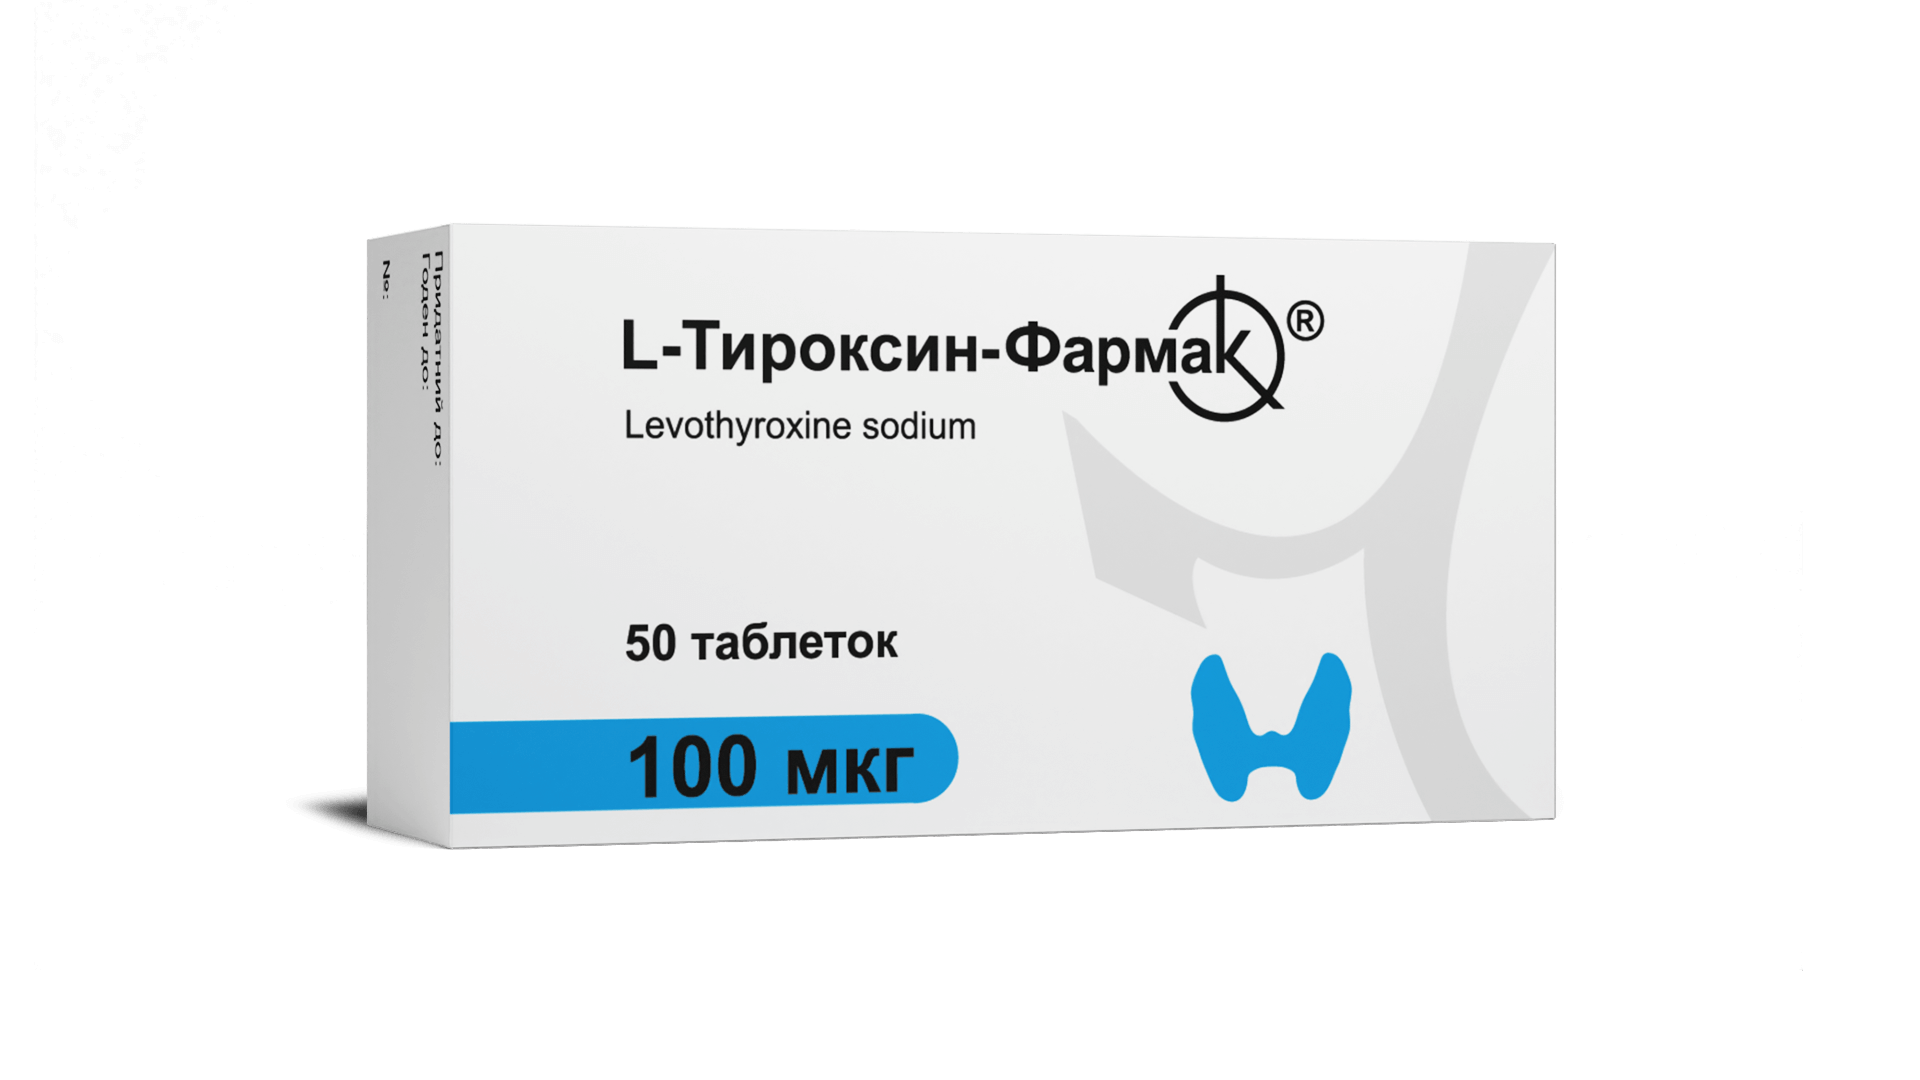 L-Тироксин-Фармак 100 мкг (1)